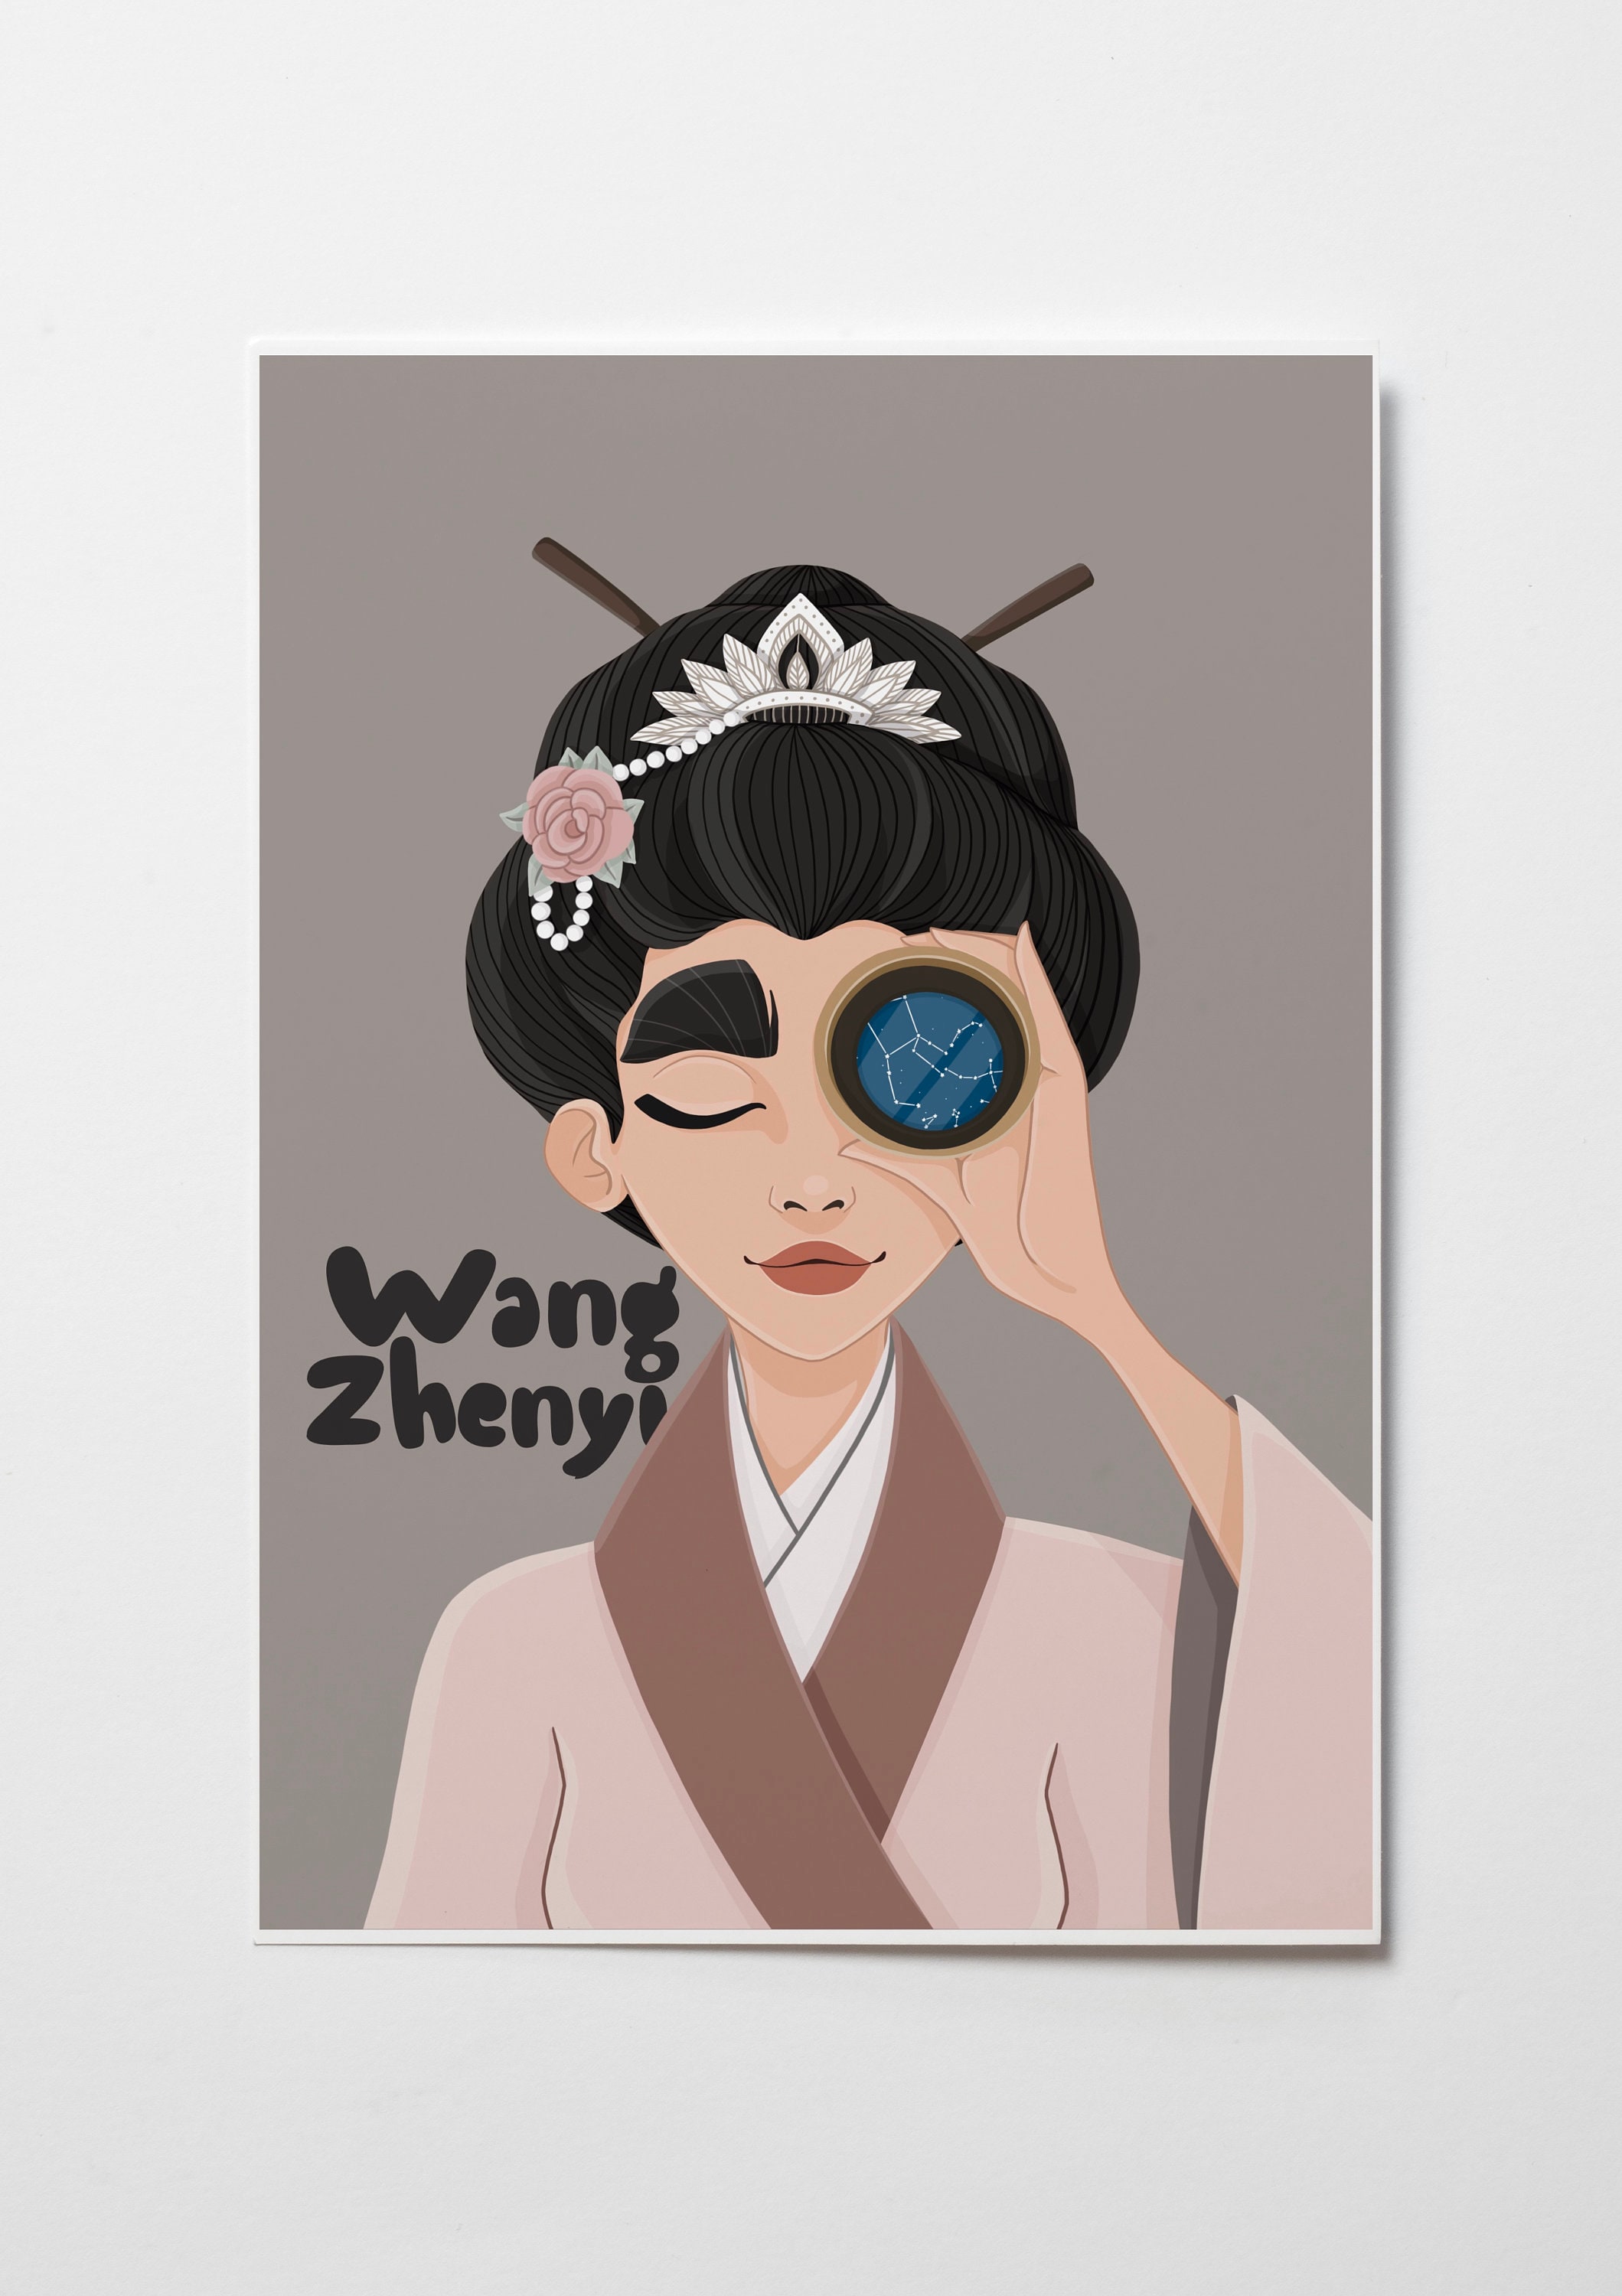 Wang Zhenyi Wall Art Women Empowerment Portrait Inspiring Women in History Asian Female Scientist Feminist Wall Art